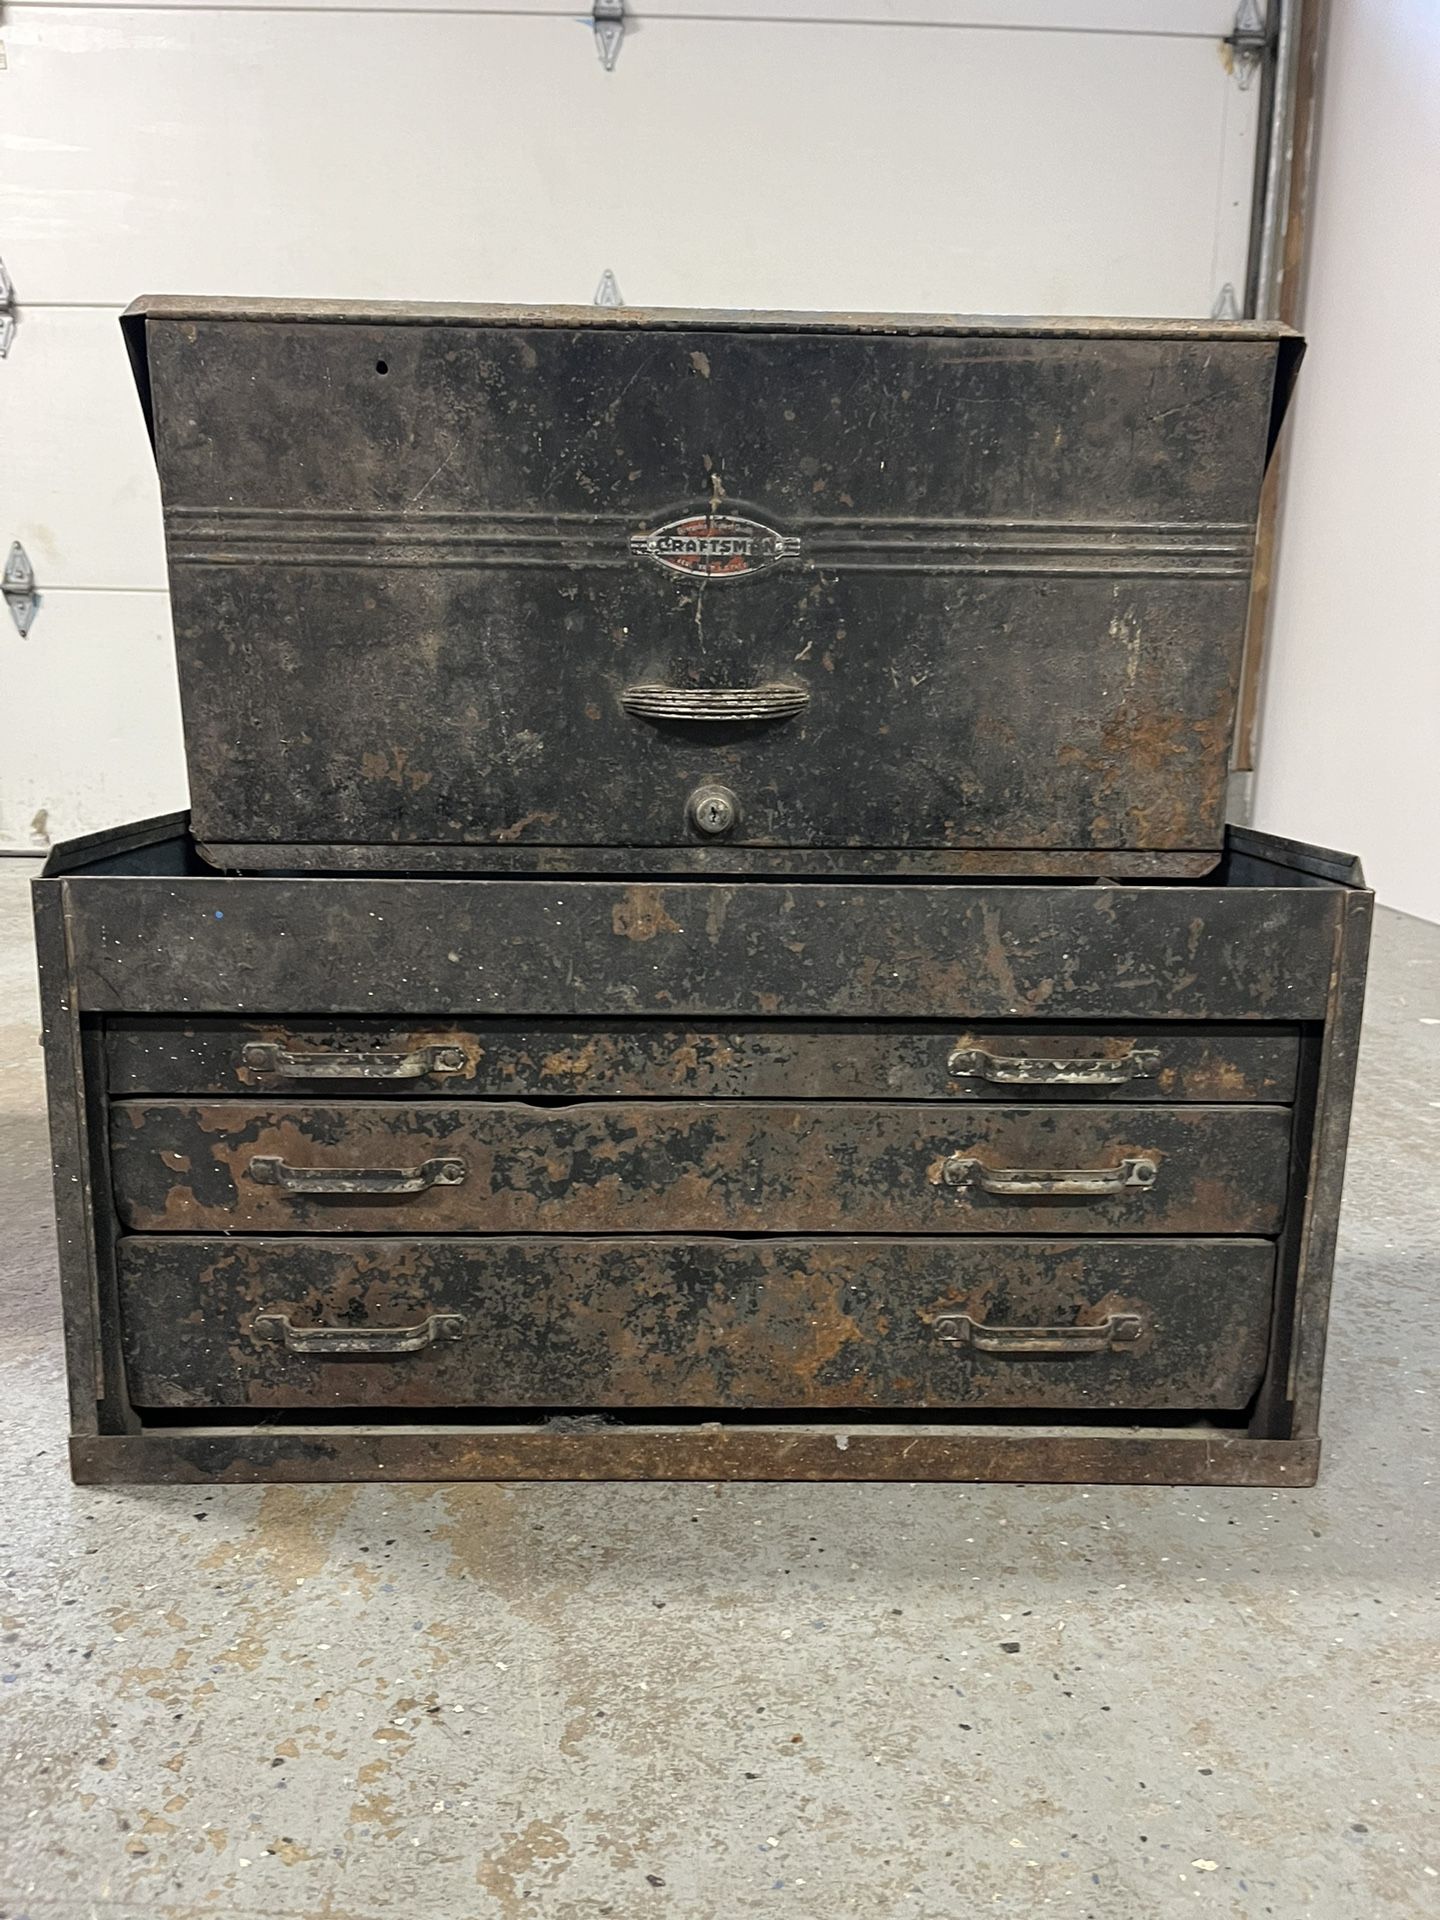 Vintage Craftsman Tool Box, No Key